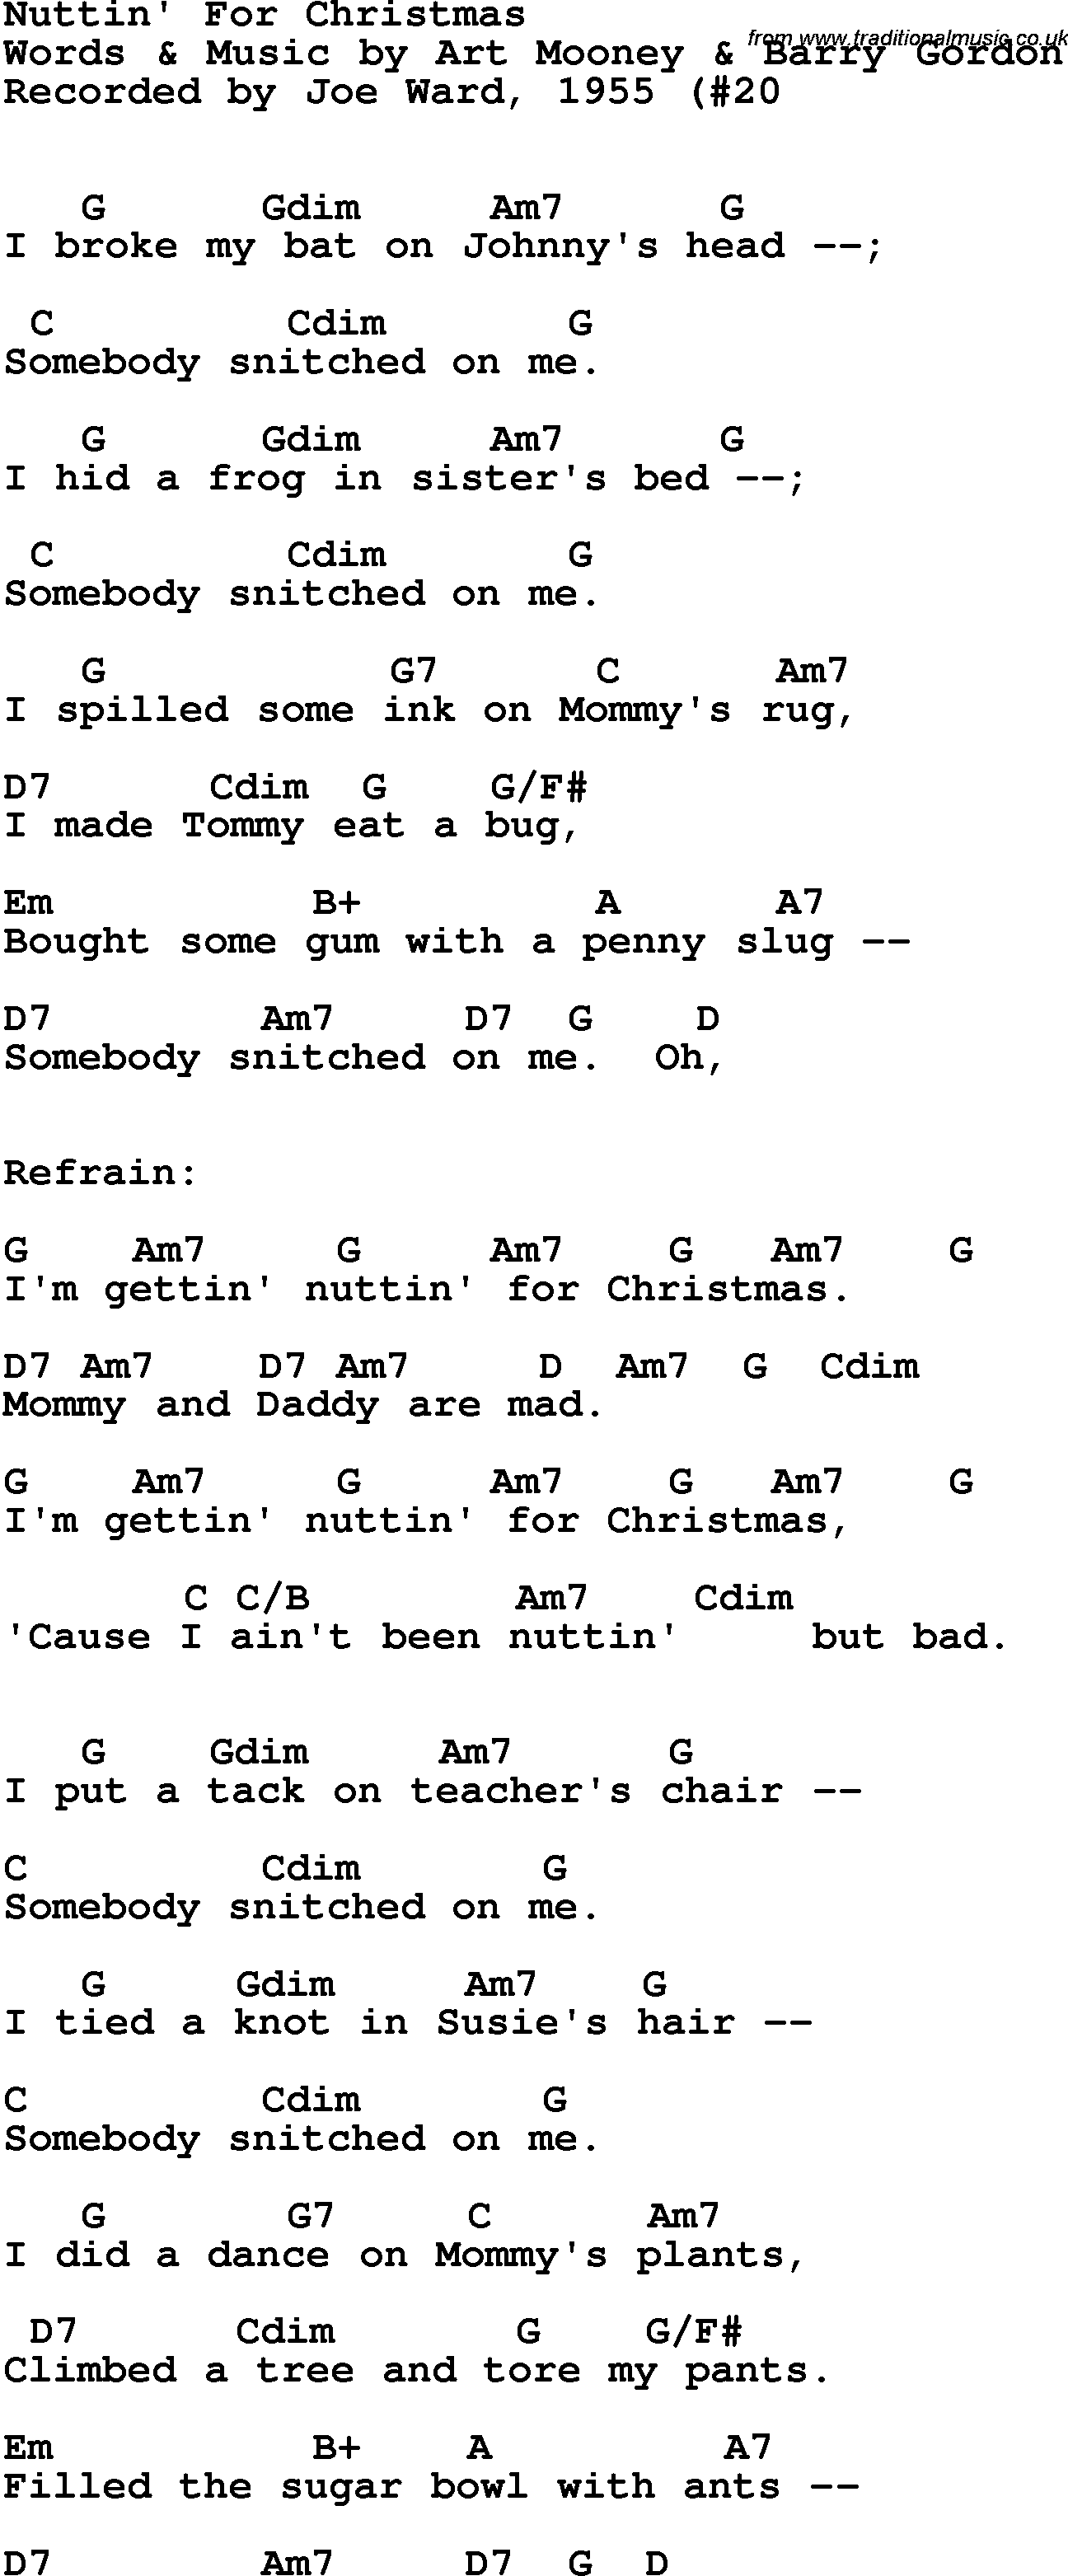 Song Lyrics with guitar chords for Nuttin' For Christmas - Joe Ward, 1950